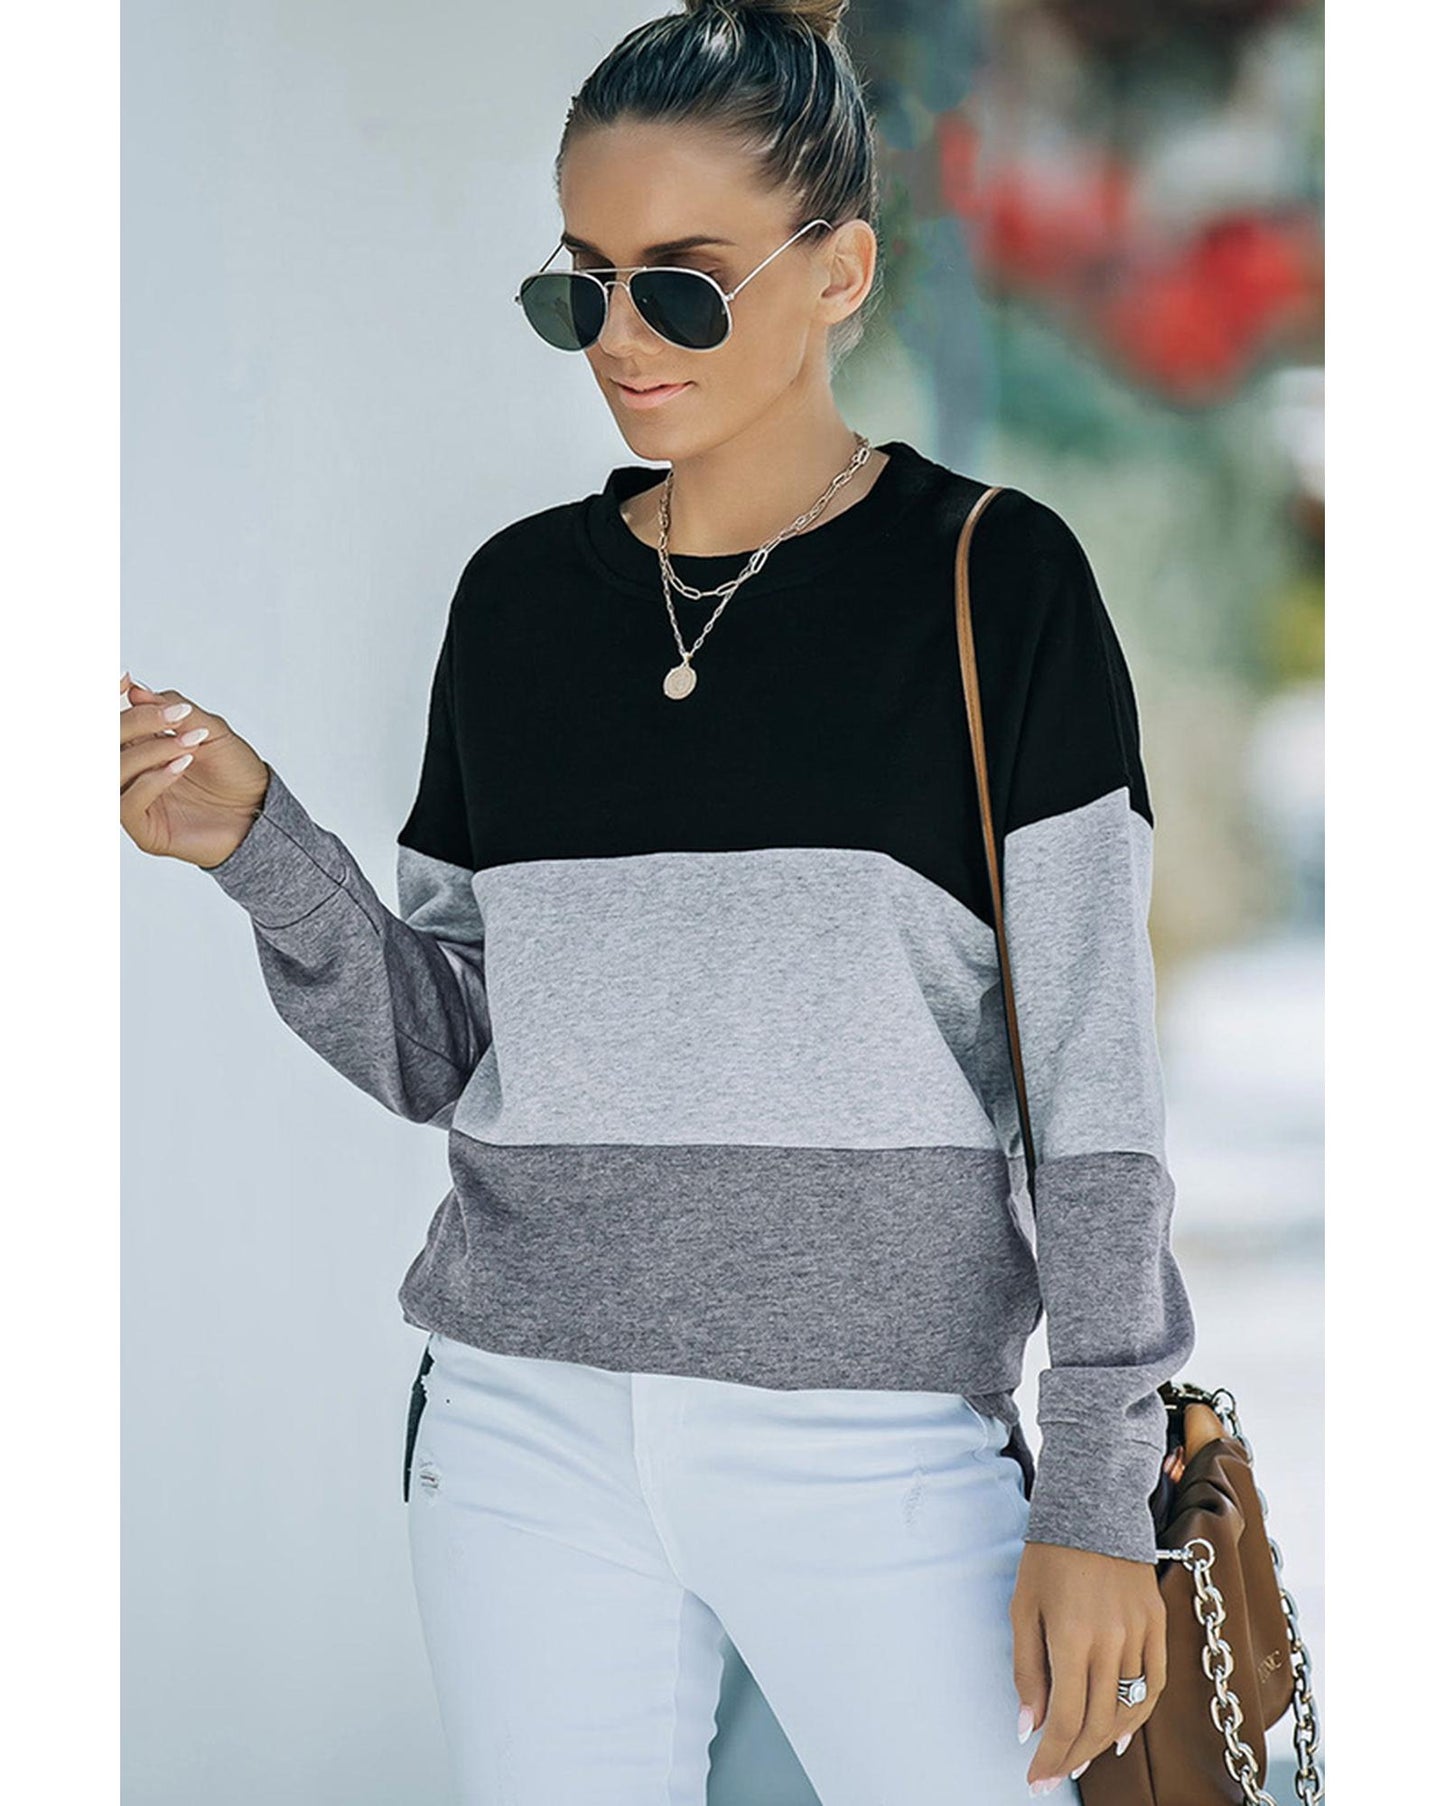 Azura Exchange Black Contrast Stitching Sweatshirt with Slits - S